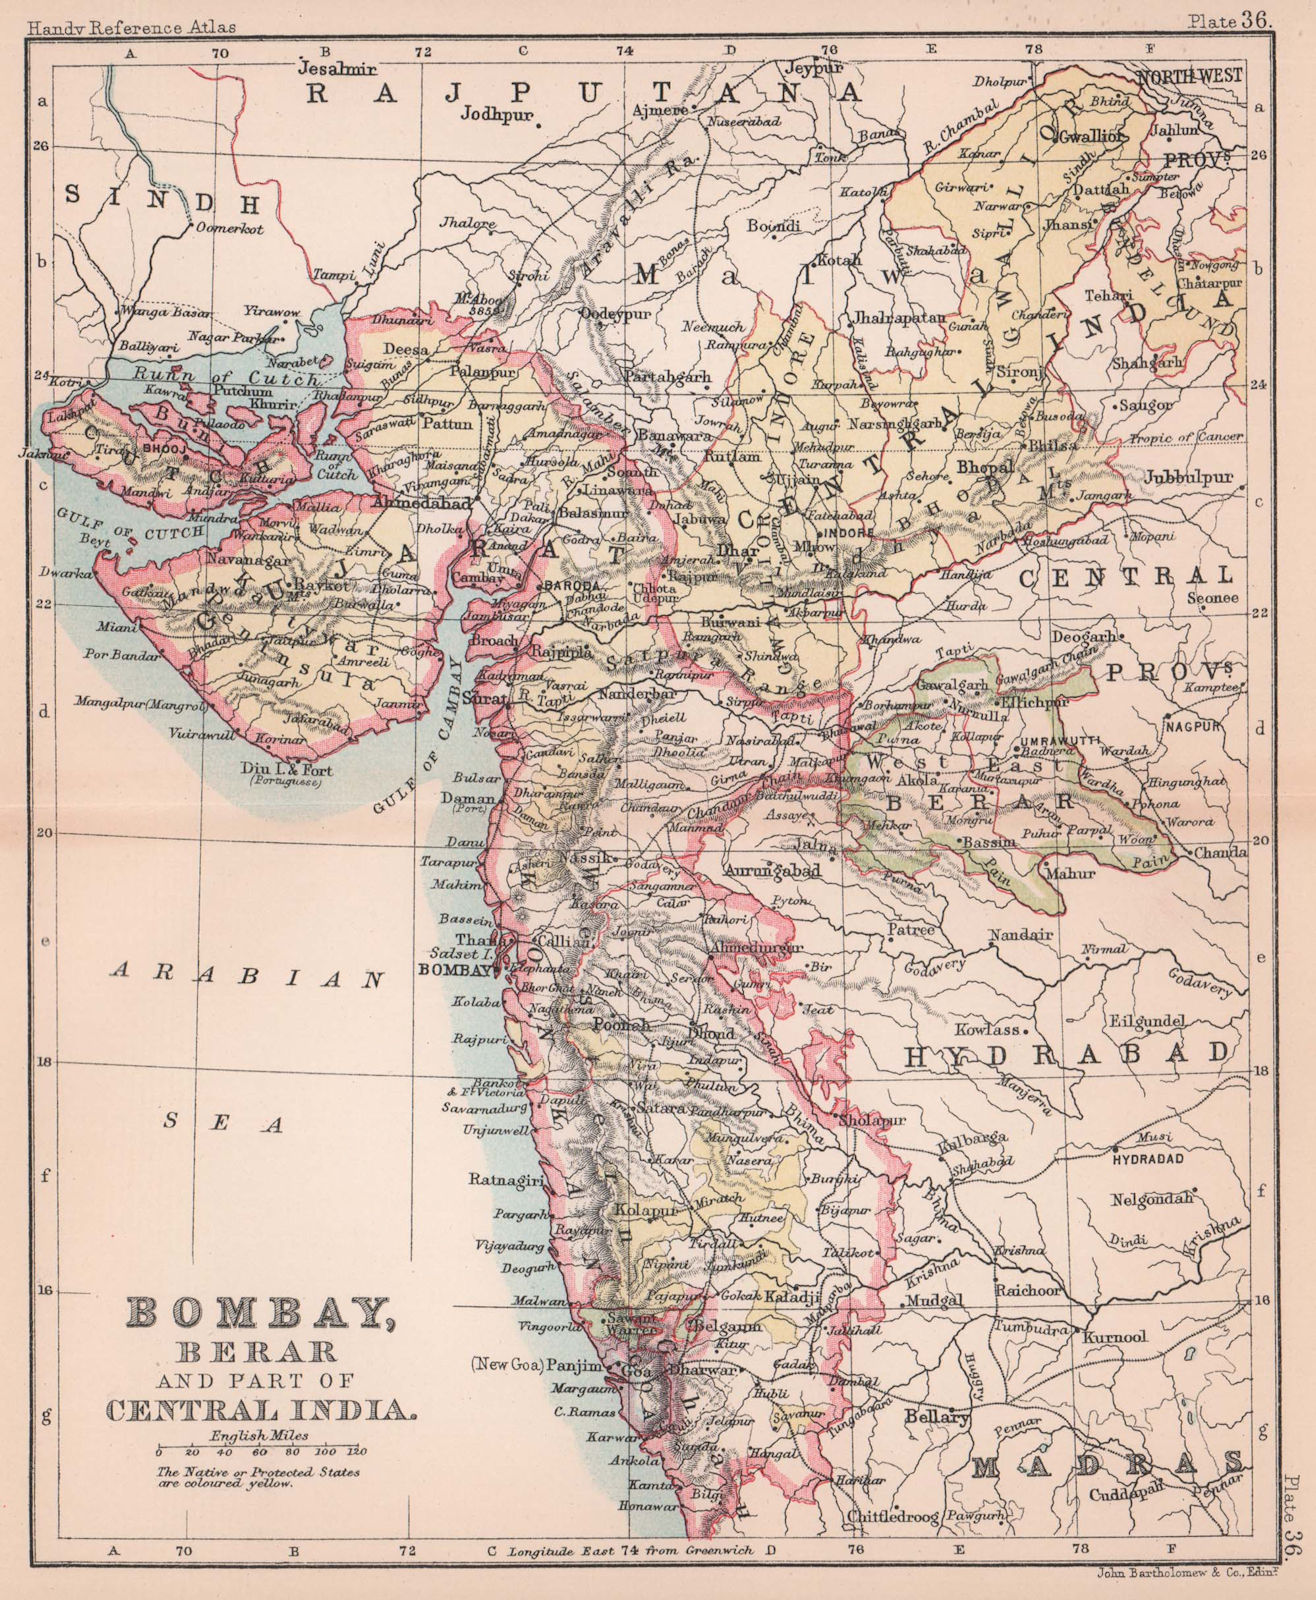 Associate Product British India West. Bombay, Berar & part of Central India. BARTHOLOMEW 1893 map